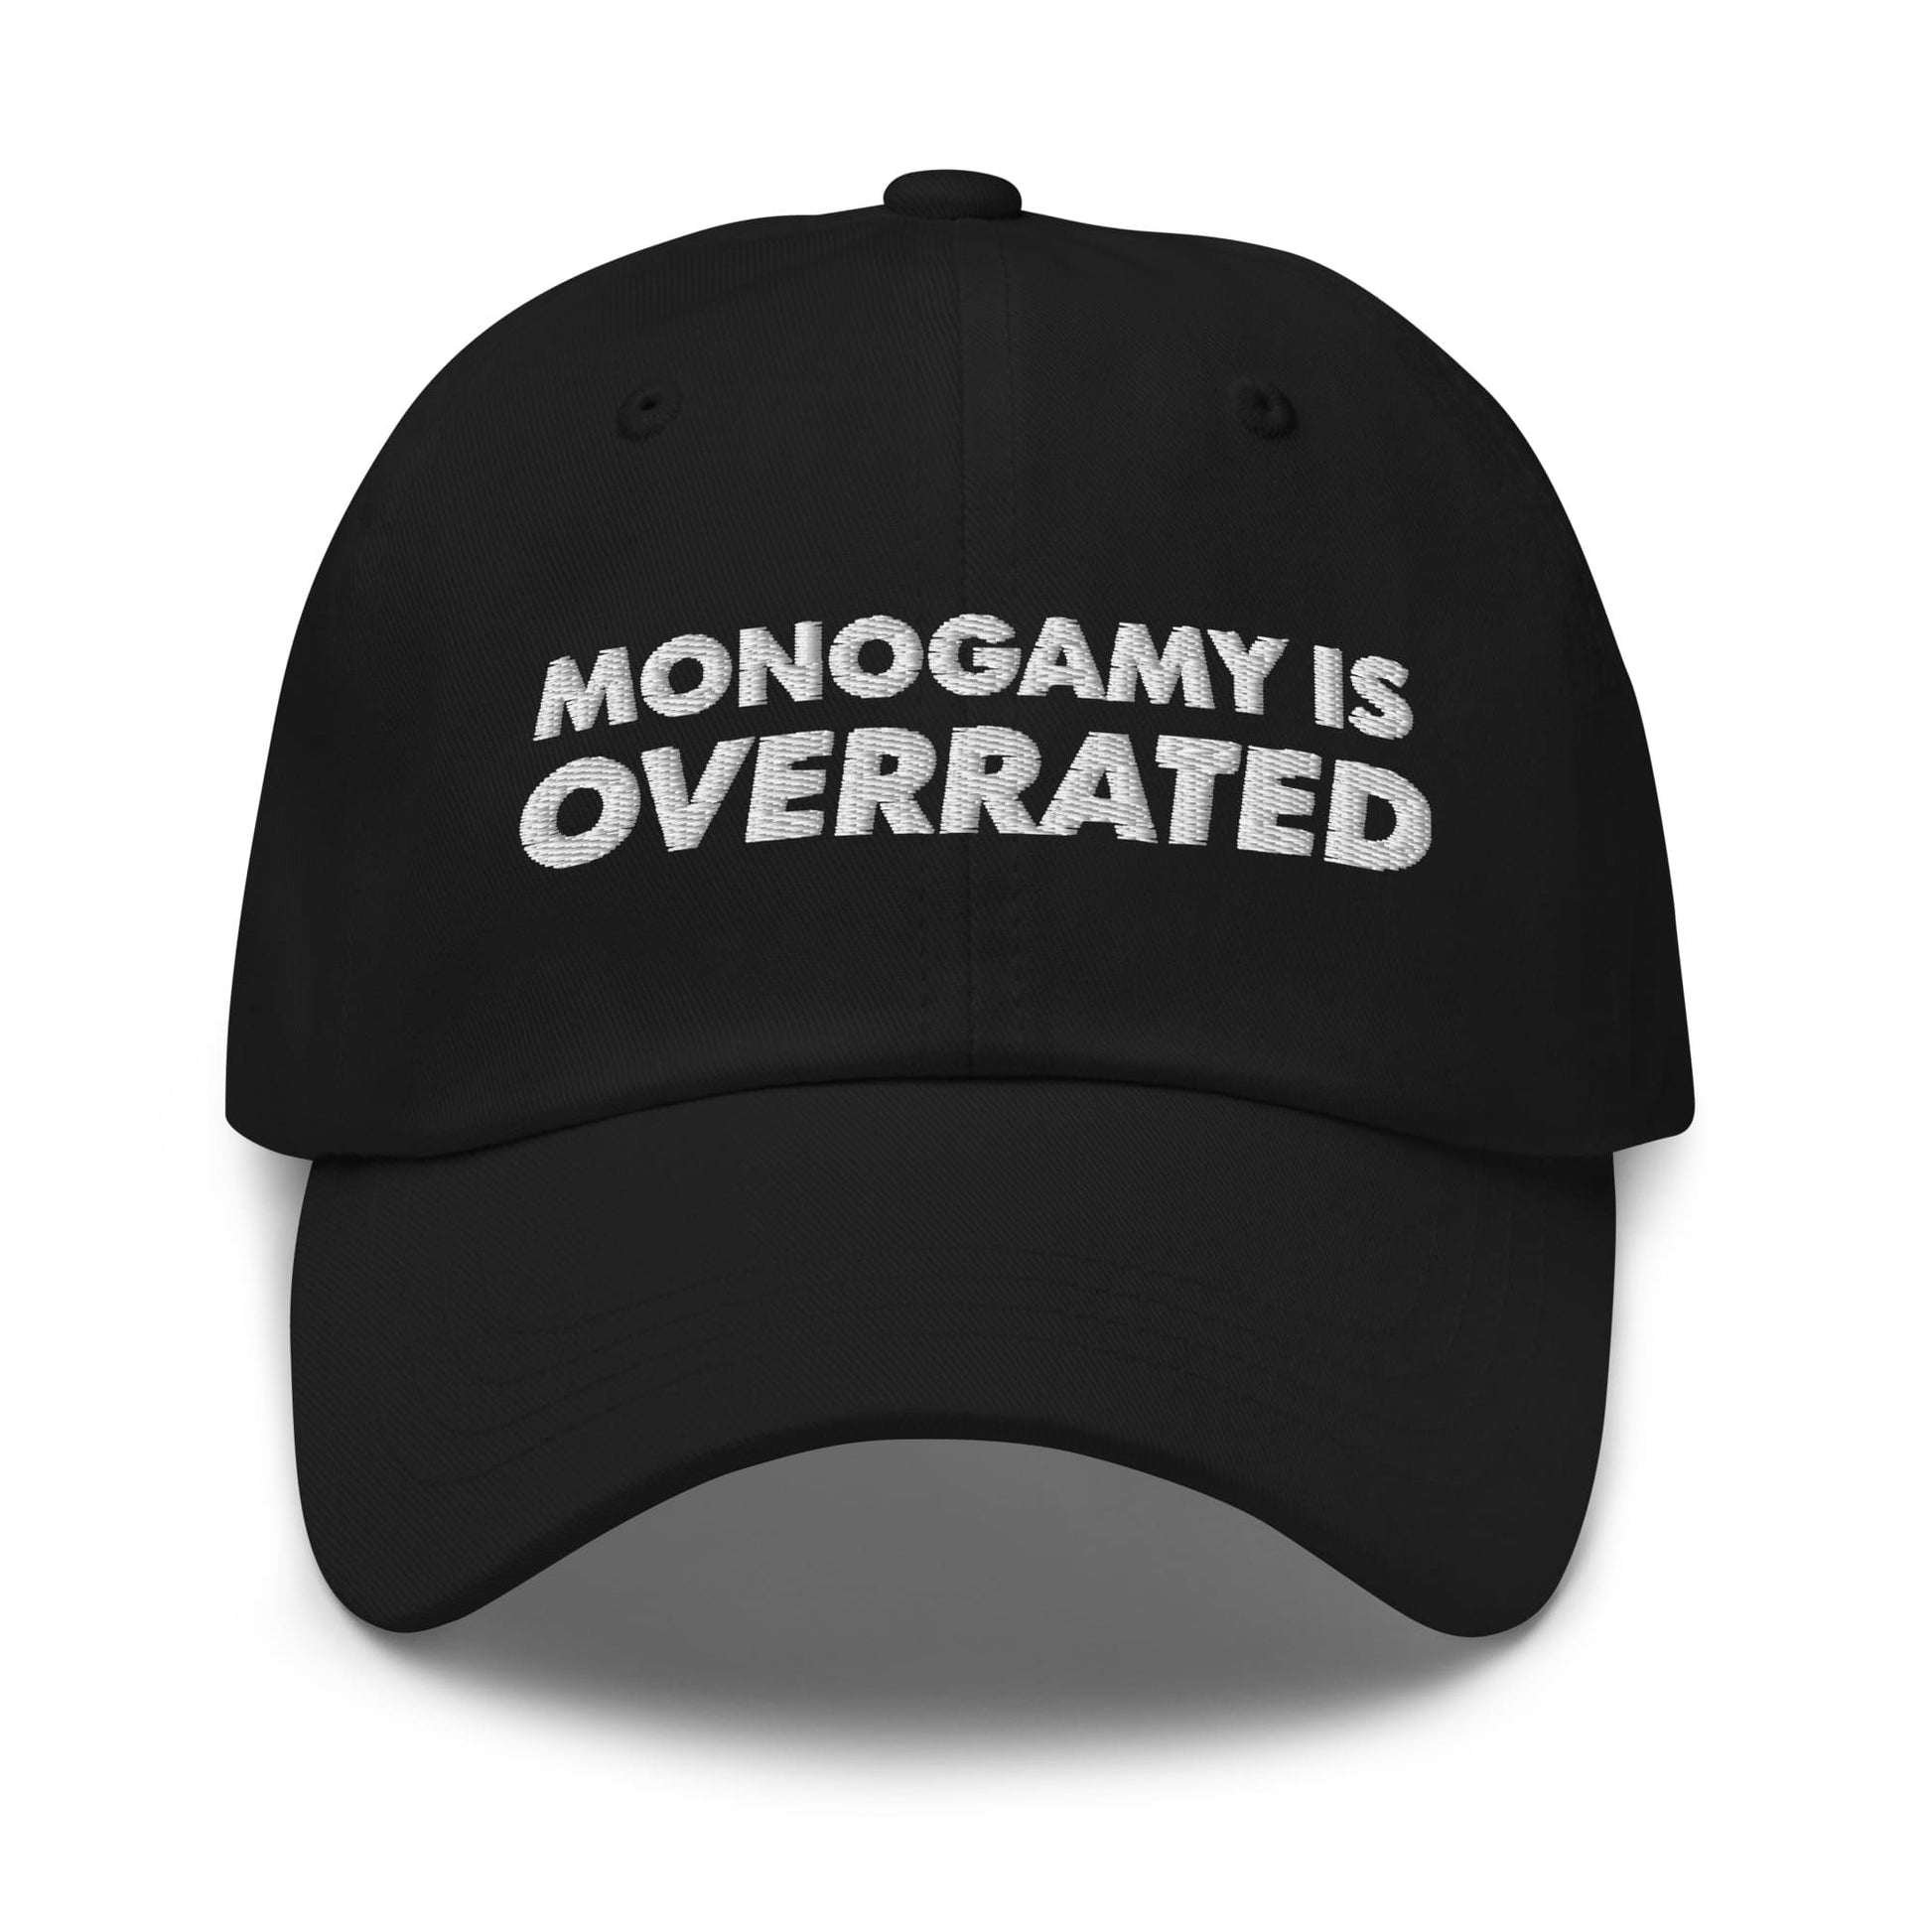 polyamory hat, statement polyamorous pride embroidered cap, black